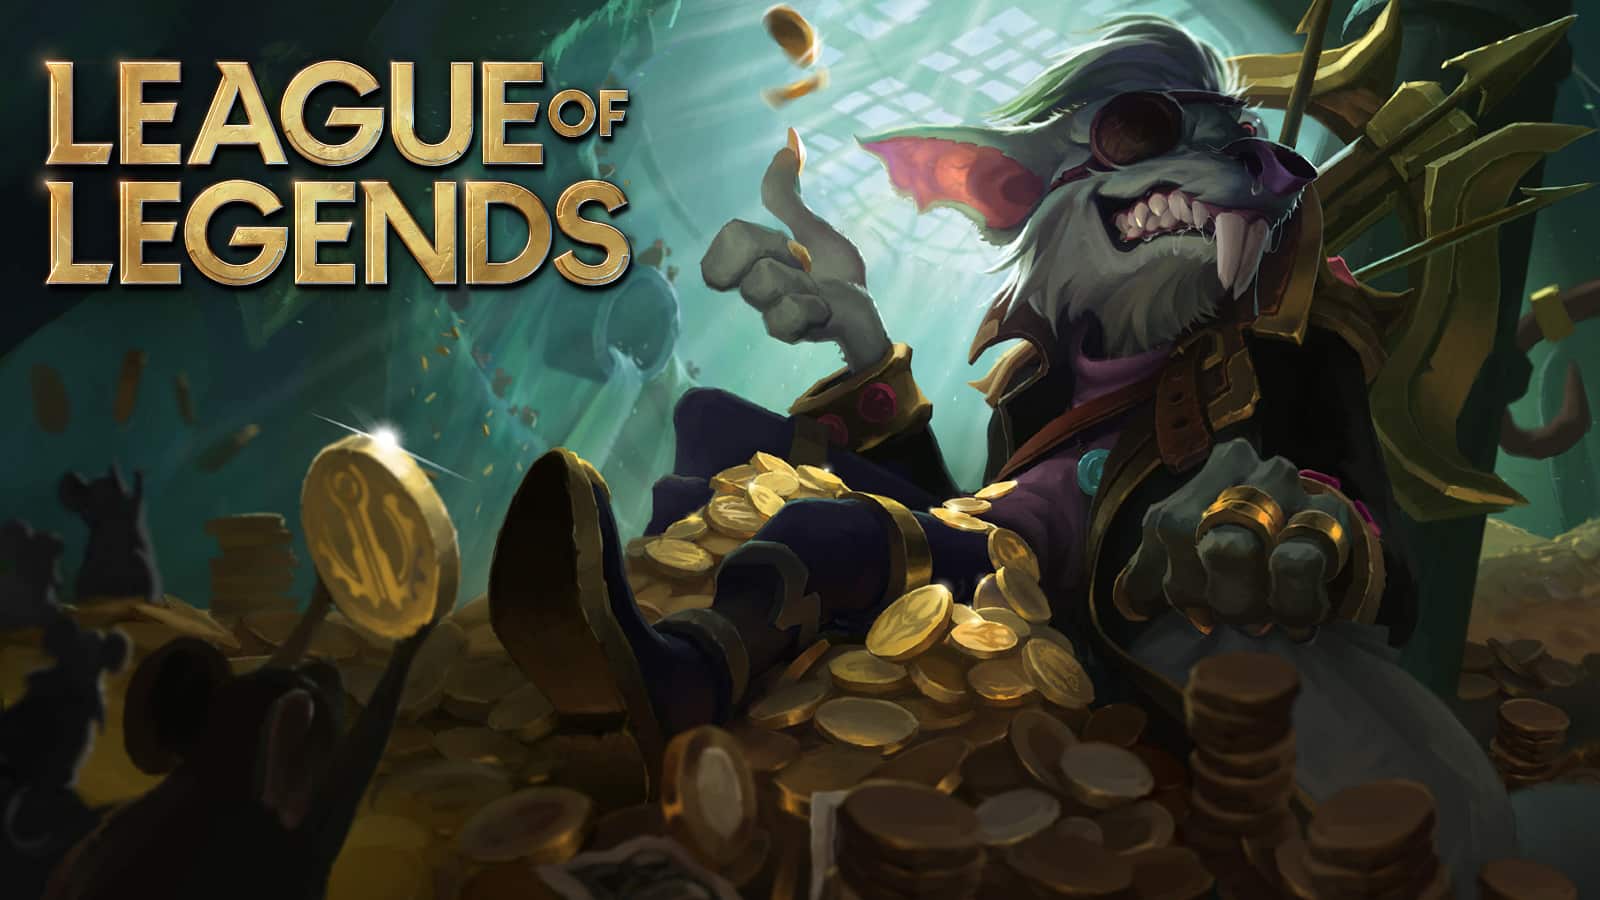 League of Legends Wallpapers - Top Free League of Legends